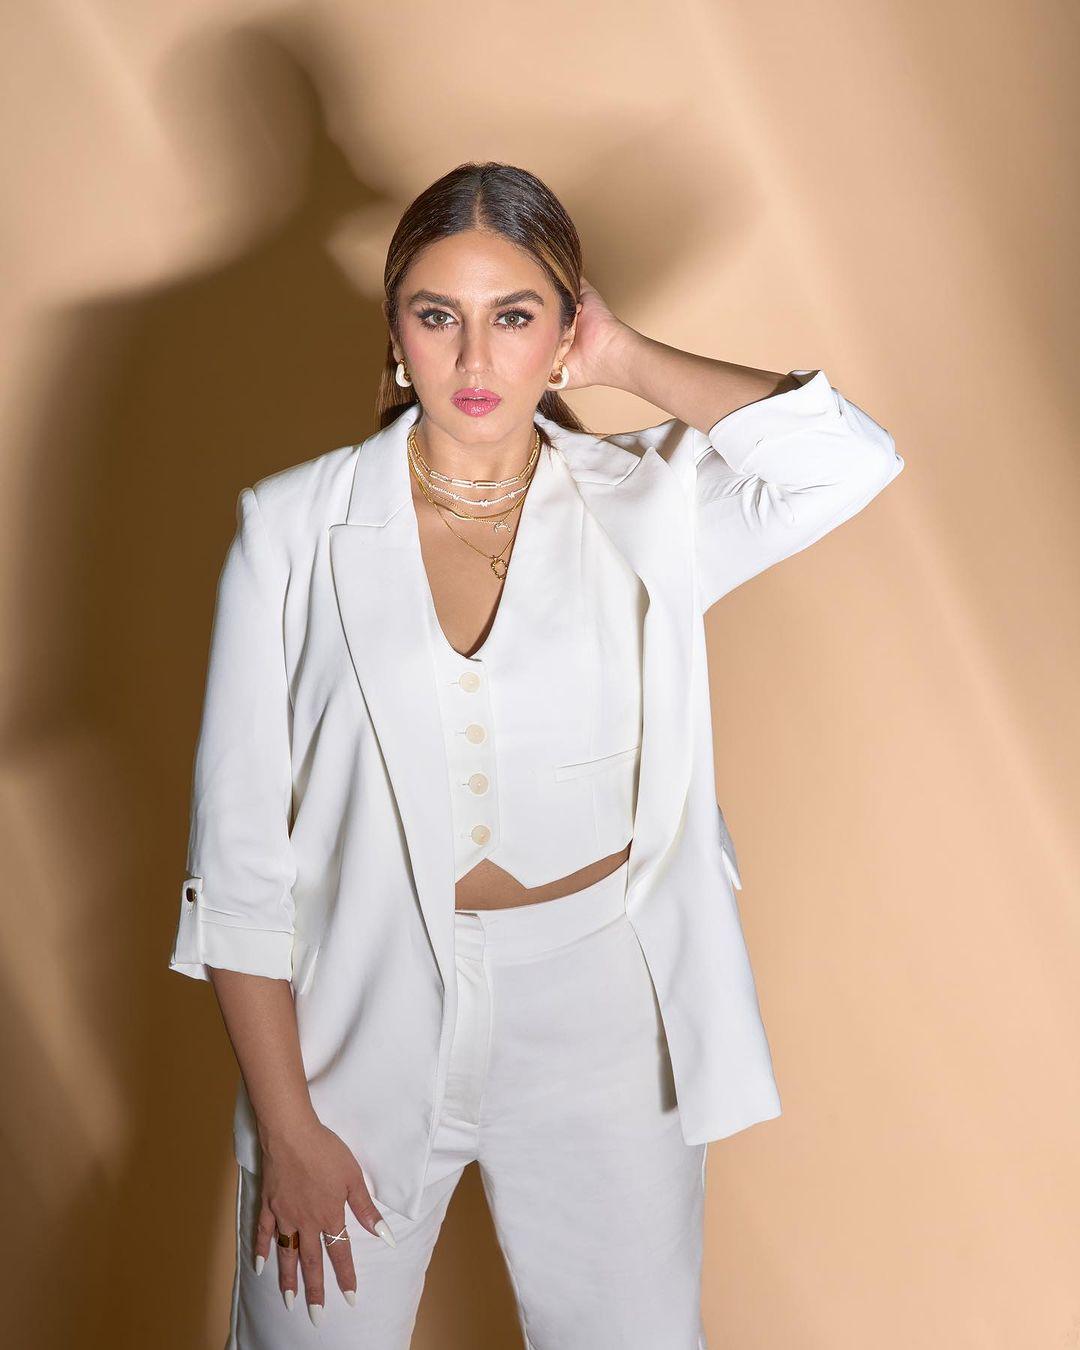 Classic and Stylish: Huma's white pantsuit is a fashion standout.